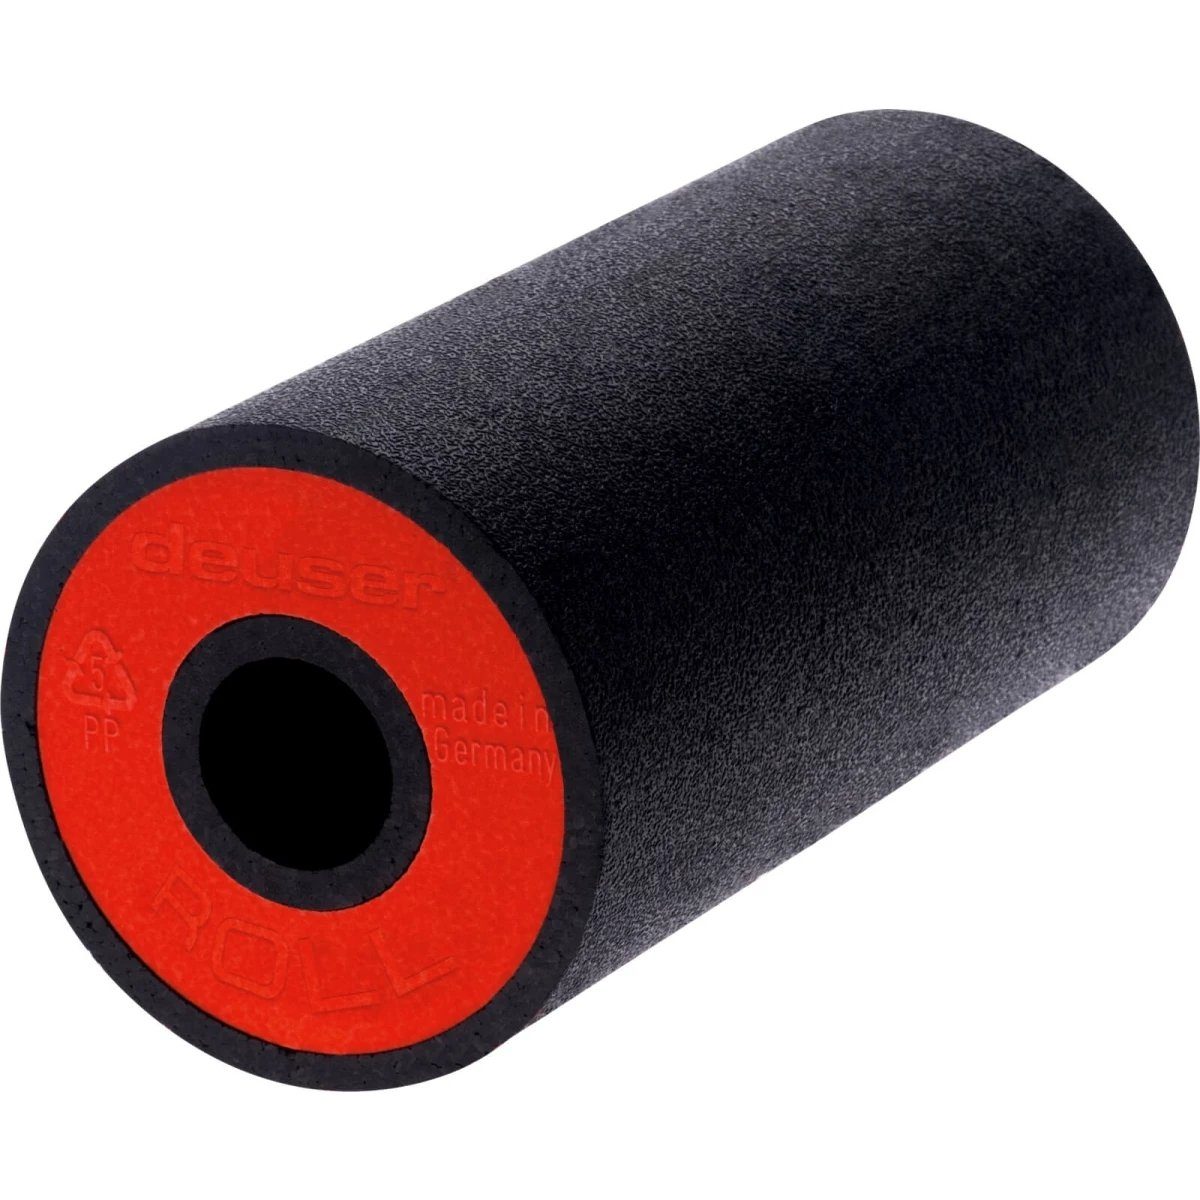 Deuser-Sports Massagerolle Yogarolle Pilatesrolle Faszienrolle Rolle Pilates, schwarz rot 32 x 16 cm